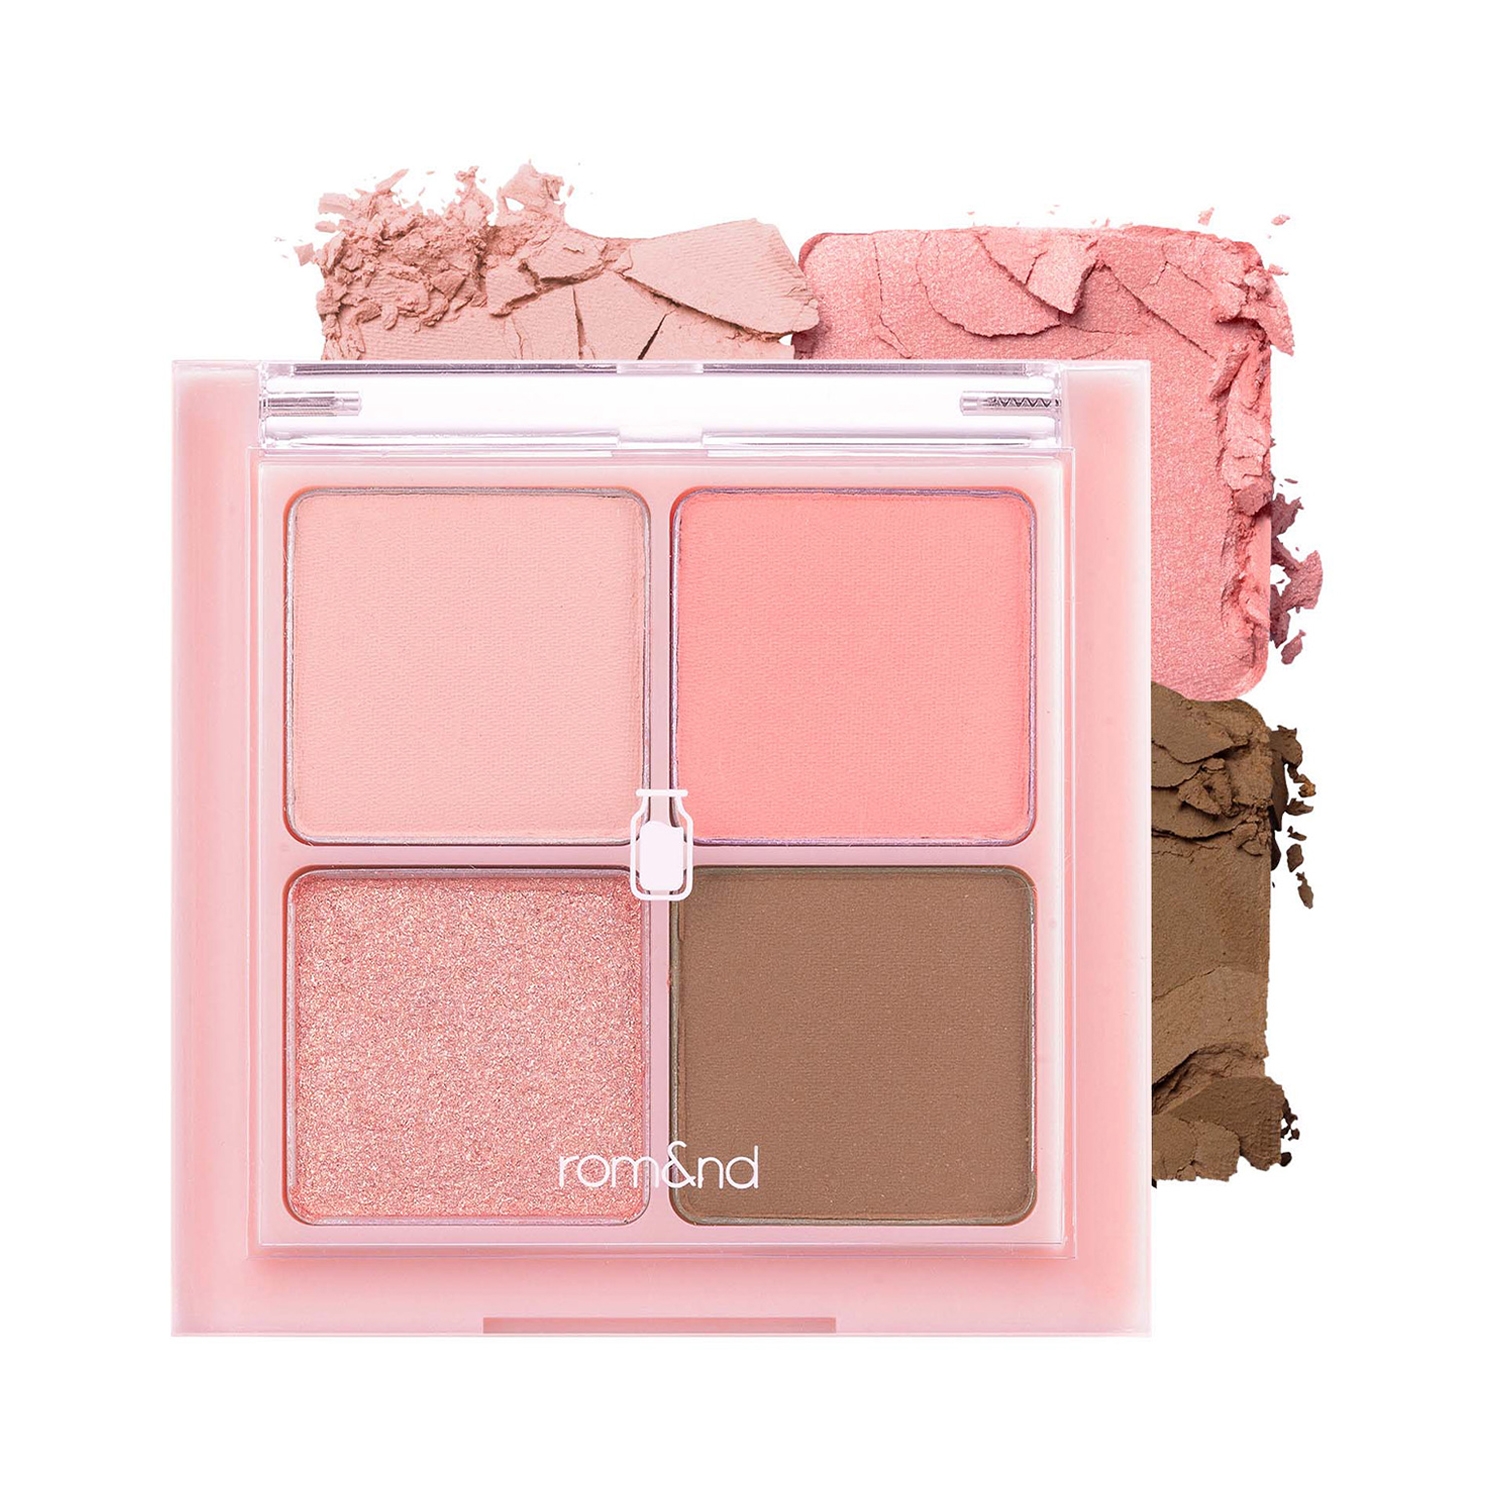 Rom&nd | Rom&nd Better Than Eyes Eyeshadow Palette - W02 Dry Peach Blossom (6.5g)